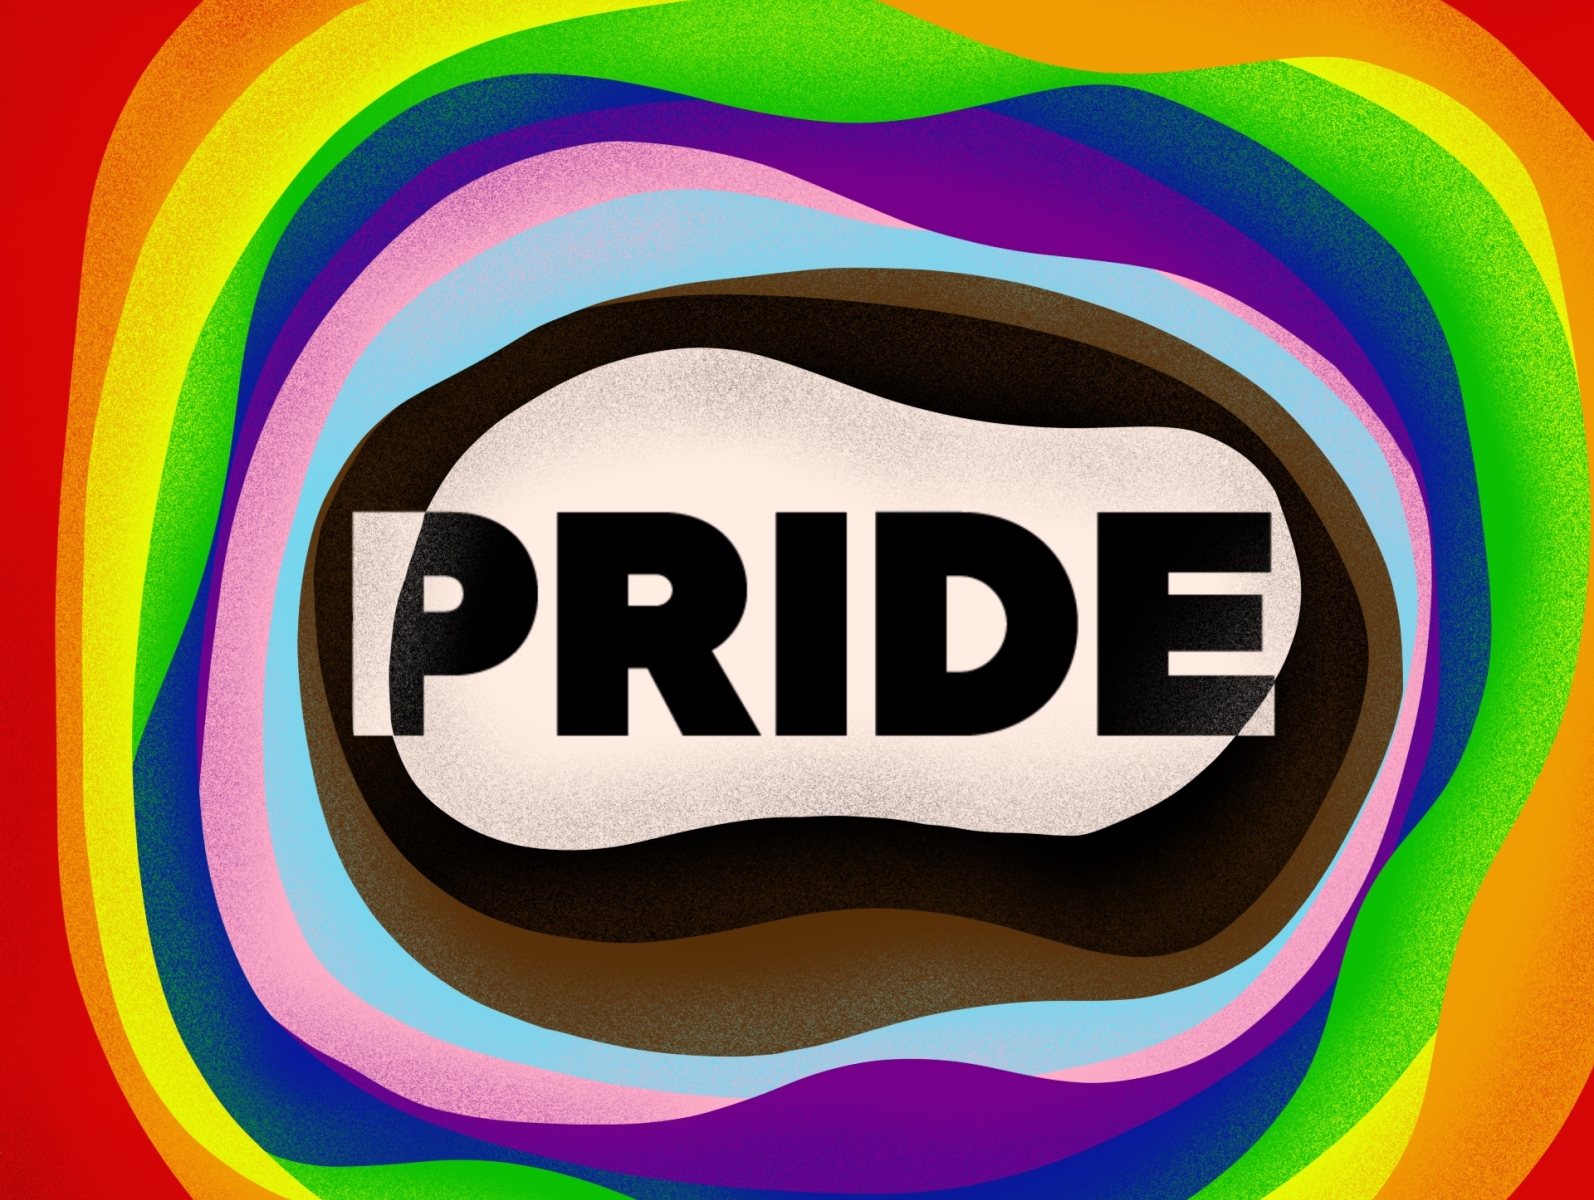 Happy Pride! by Jake Nolan on Dribbble